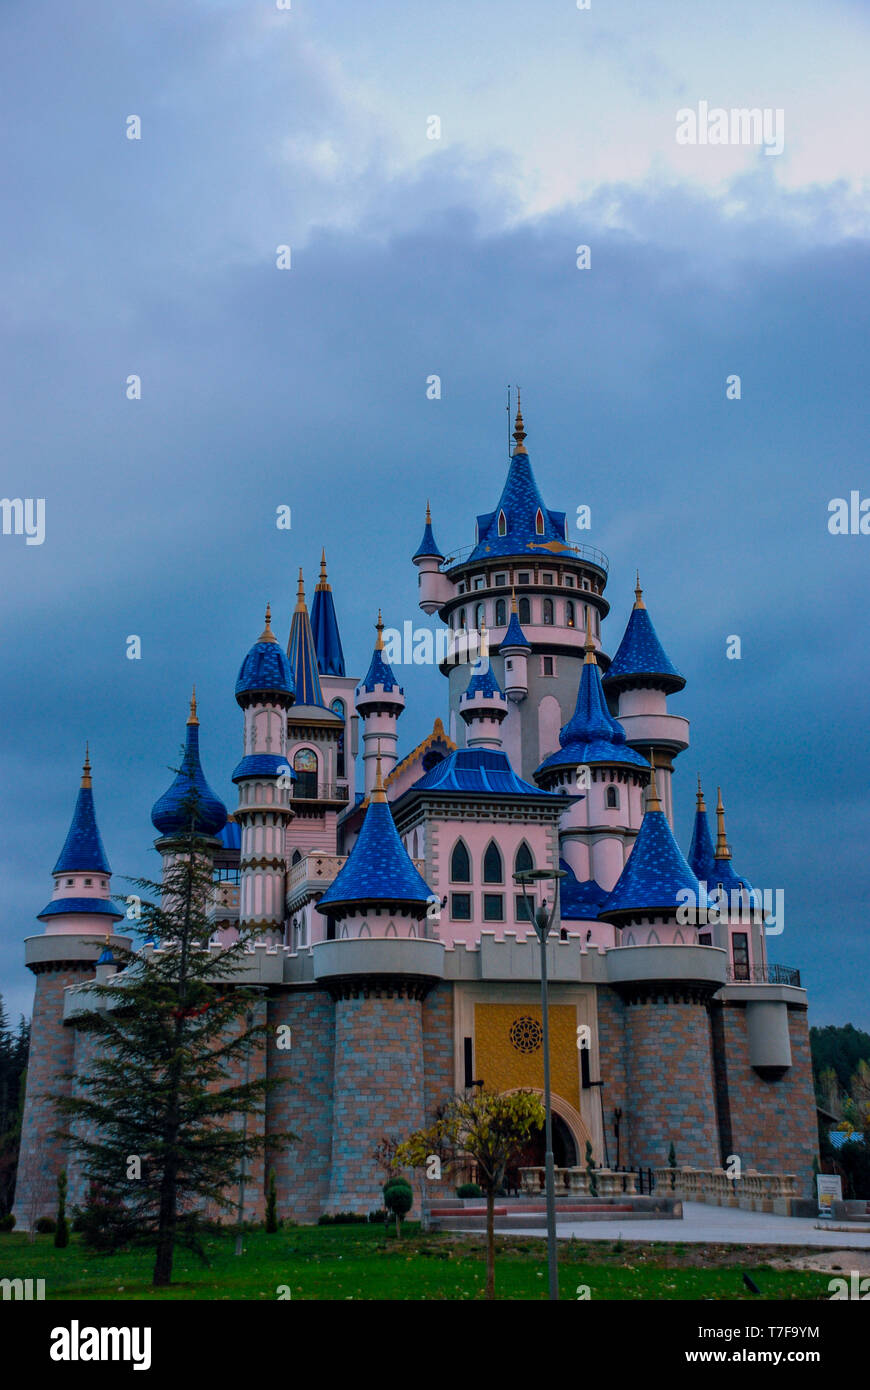 Eskisehir Sazova Fairy Castle on a cloudy day front view Stock Photo